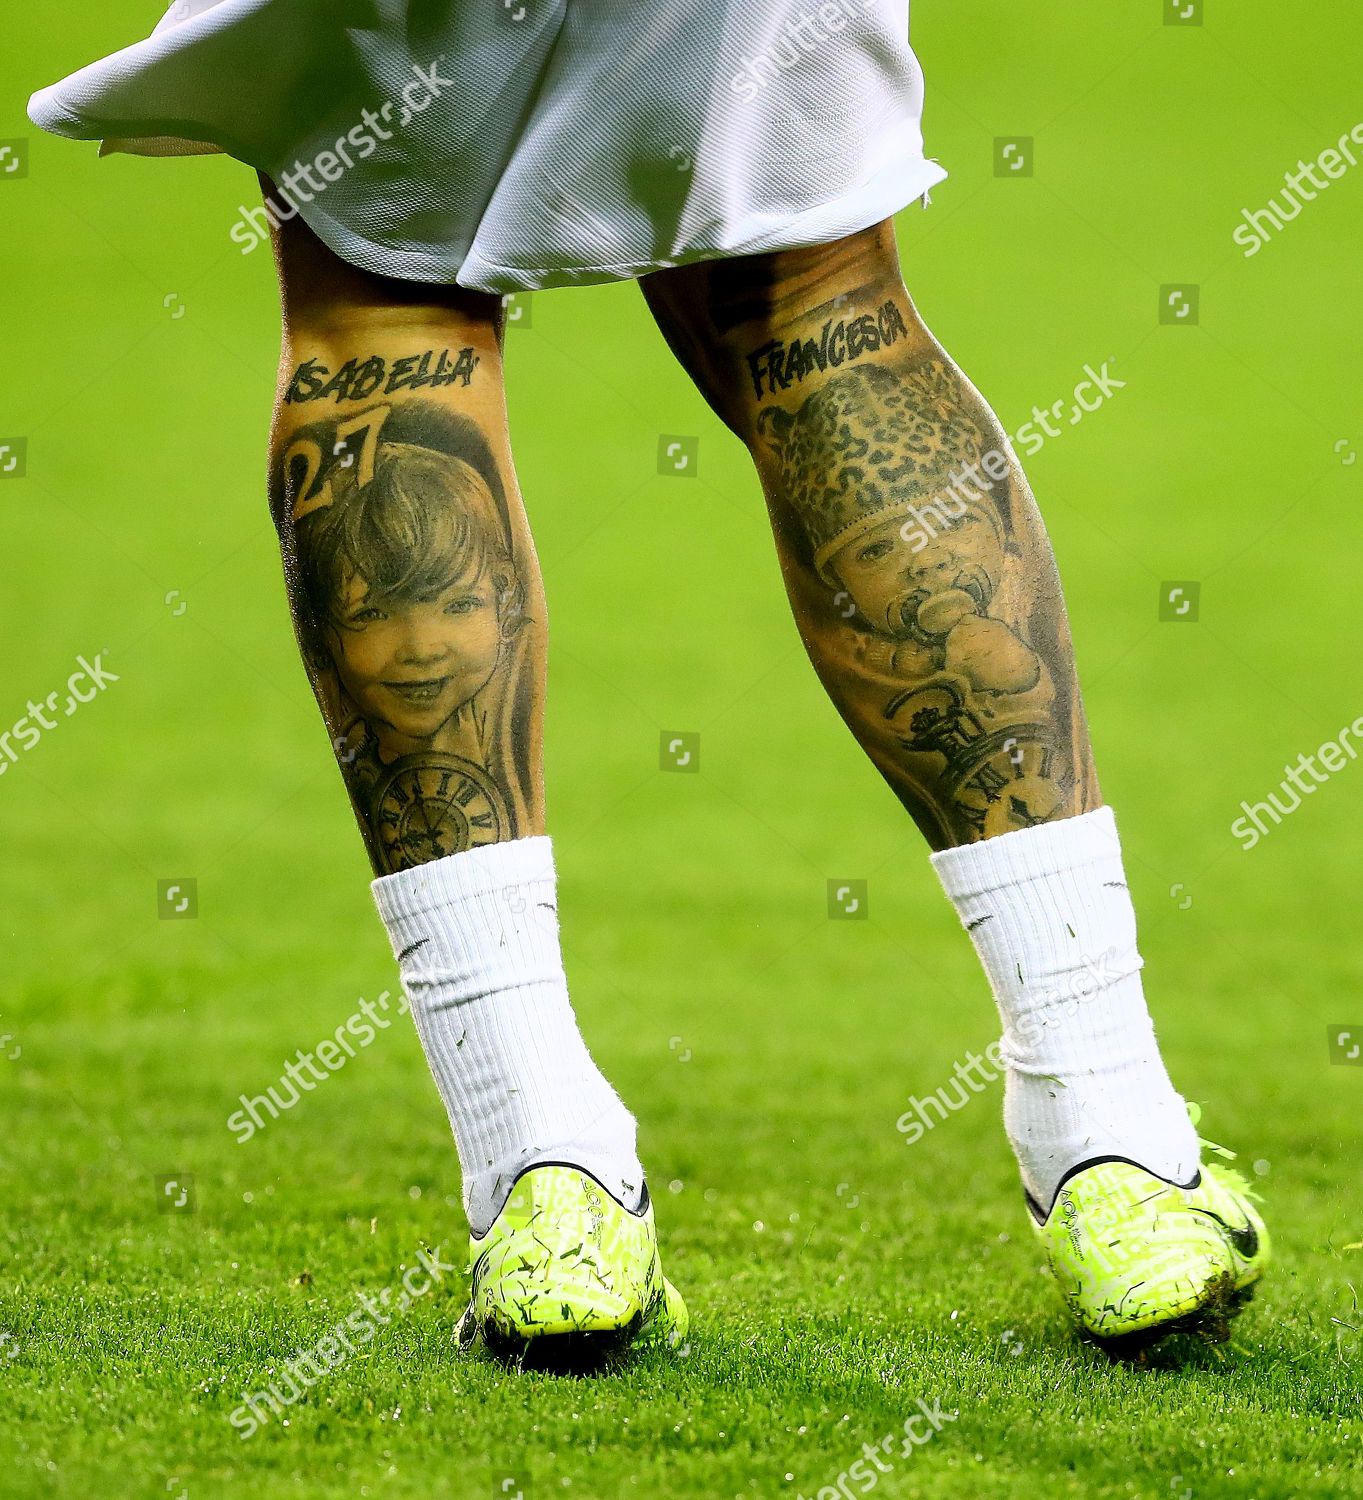 belgium player with tattoos